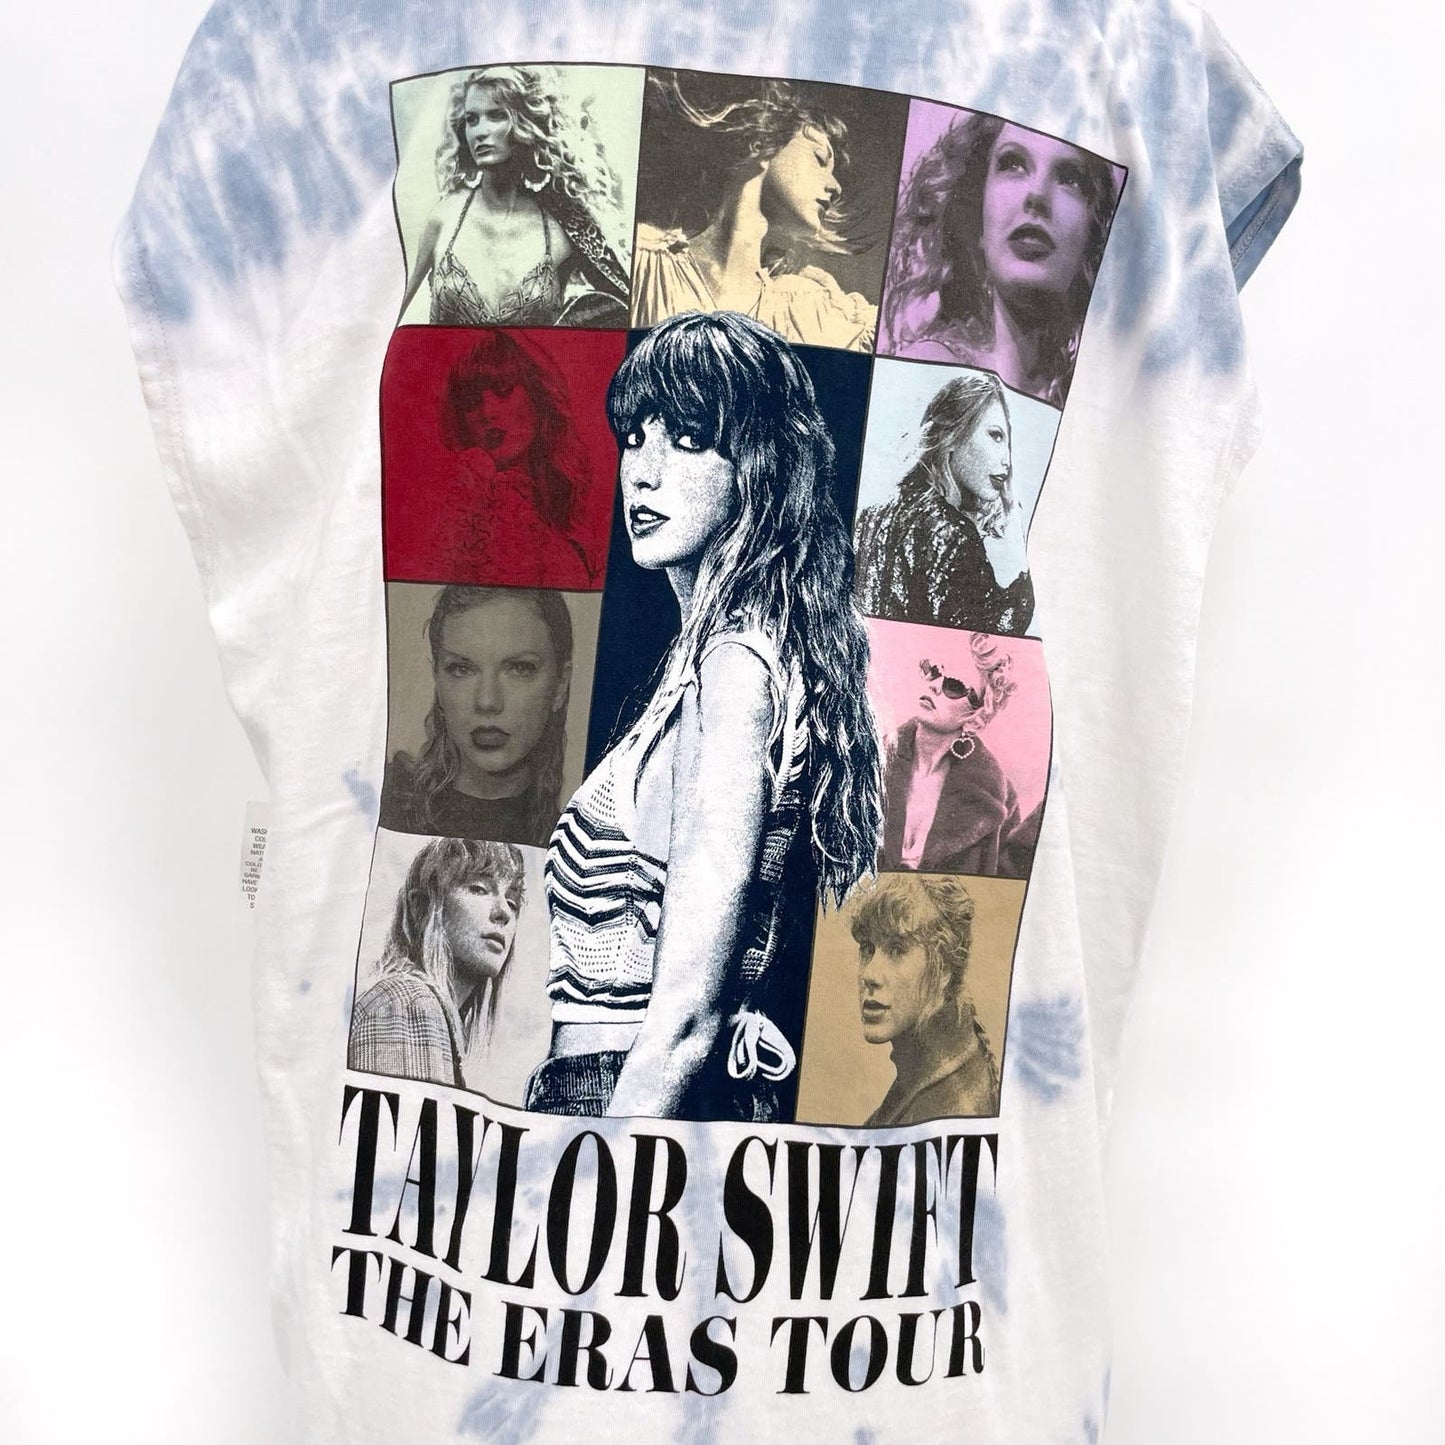 NEW Taylor Swift Eras Tour Tie Dye Tank Top Muscle Tee Stadium Exclusive Merch Size L